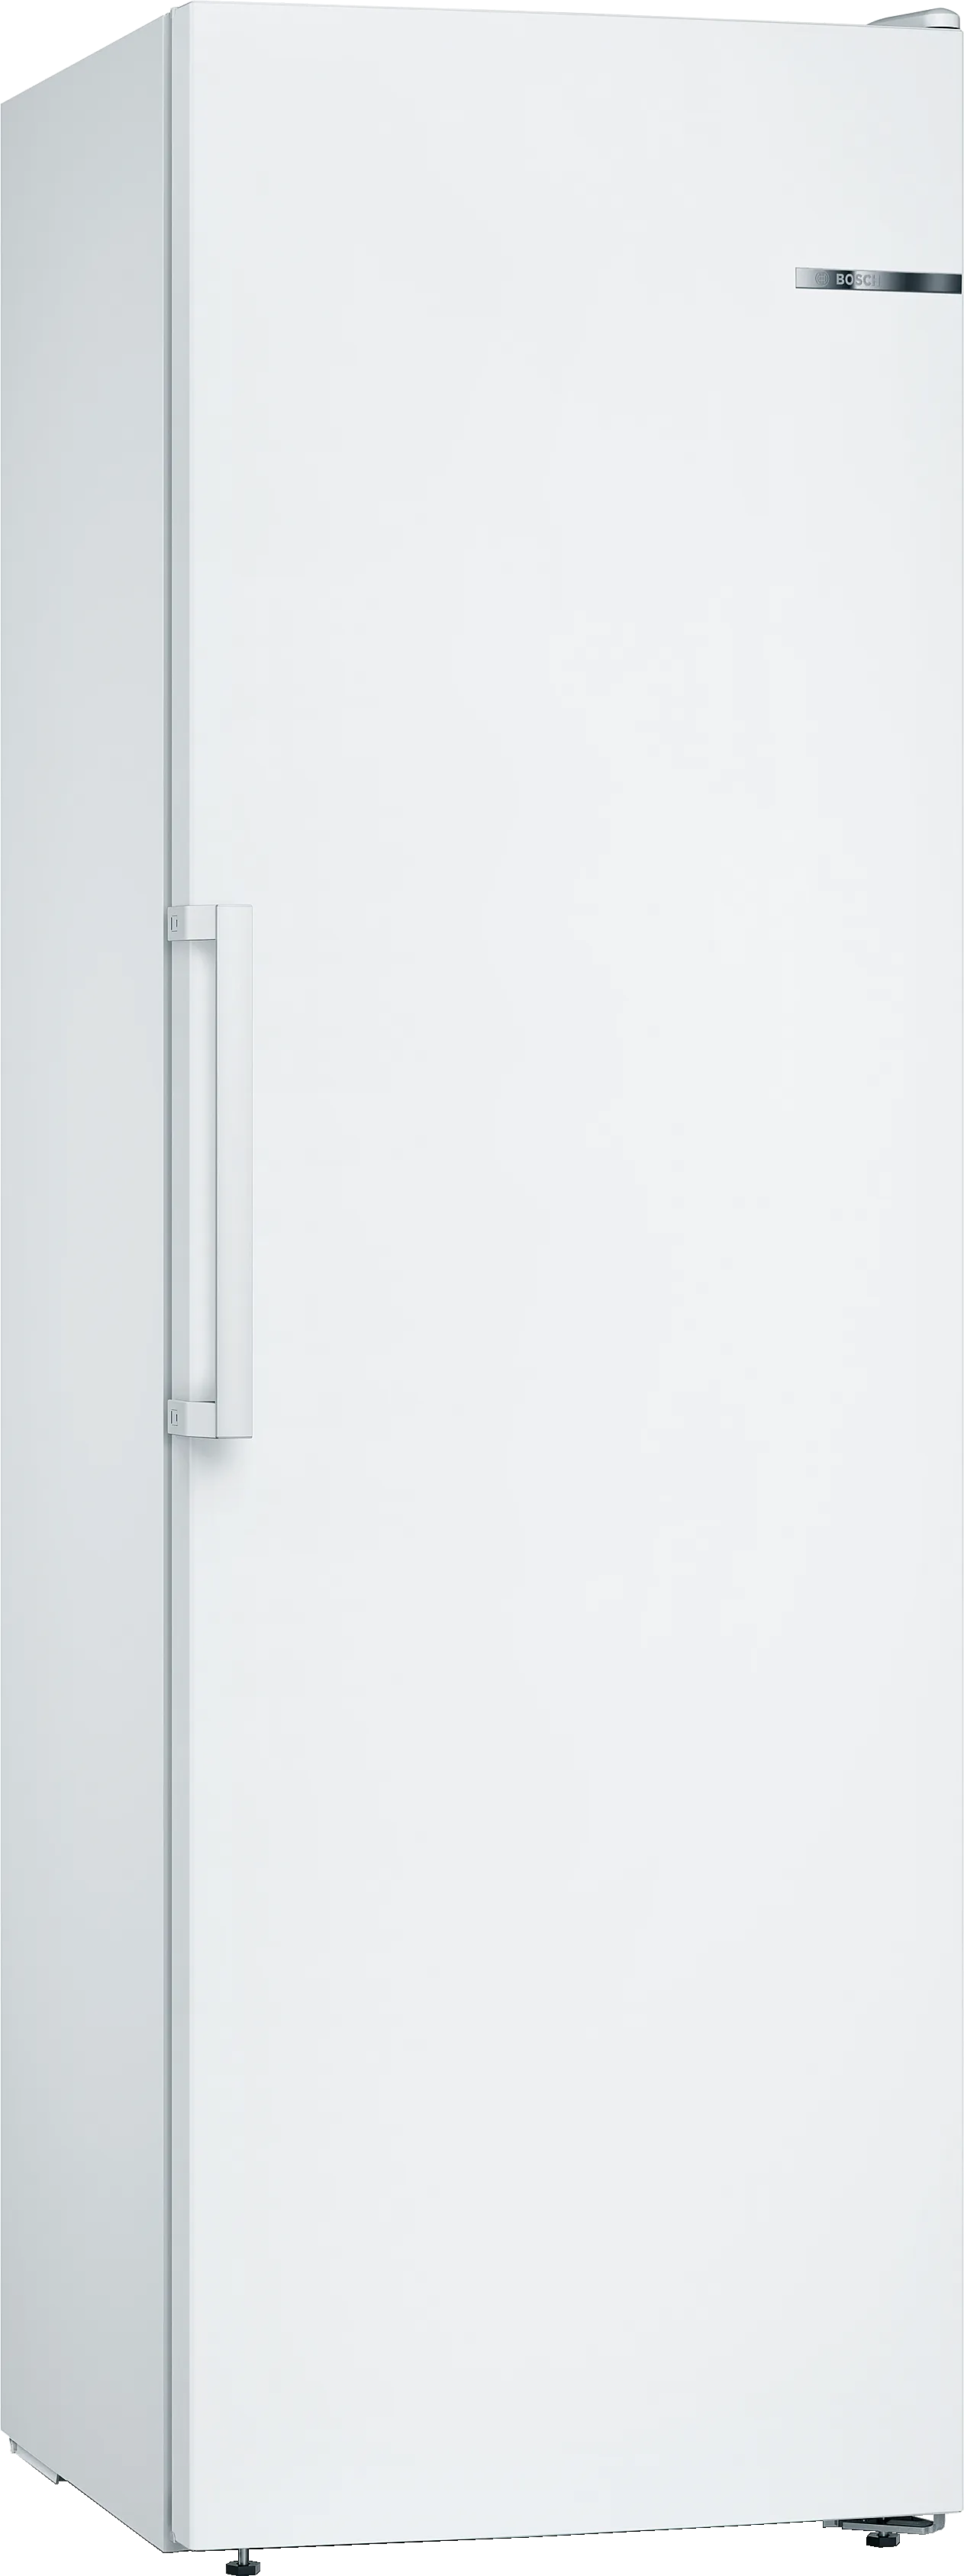 Series 4 free-standing freezer 186 x 60 cm White 